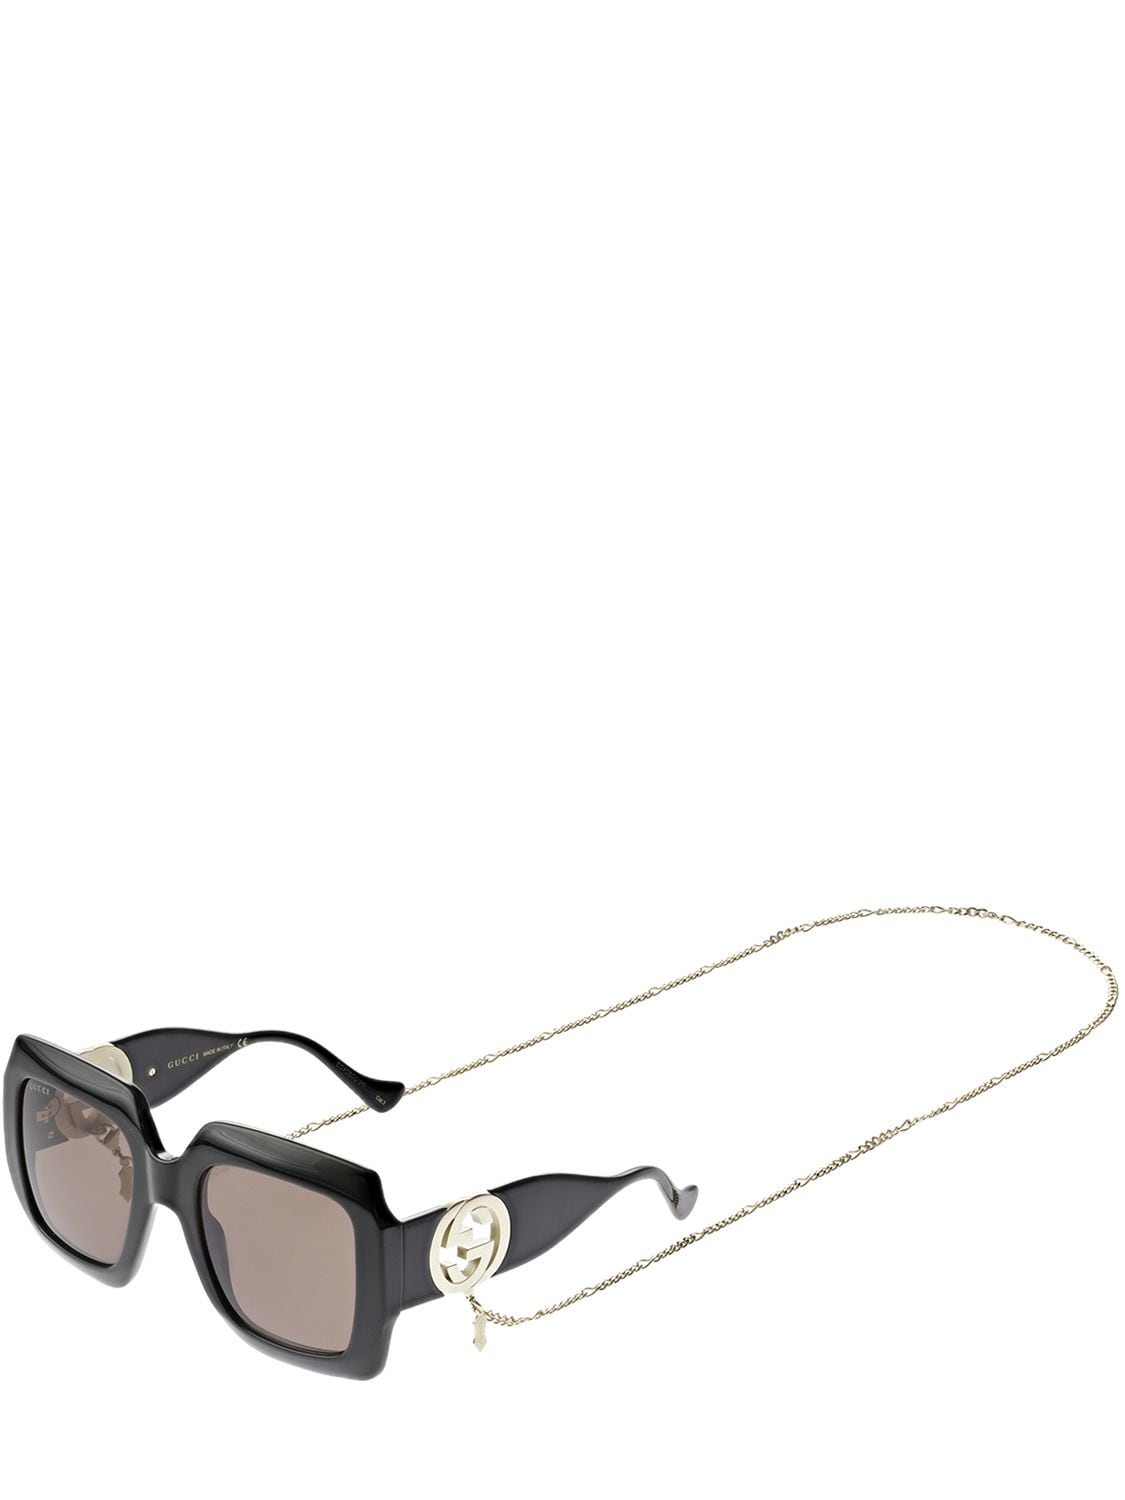 Gucci Chain Squared Sunglasses In 블랙,그레이